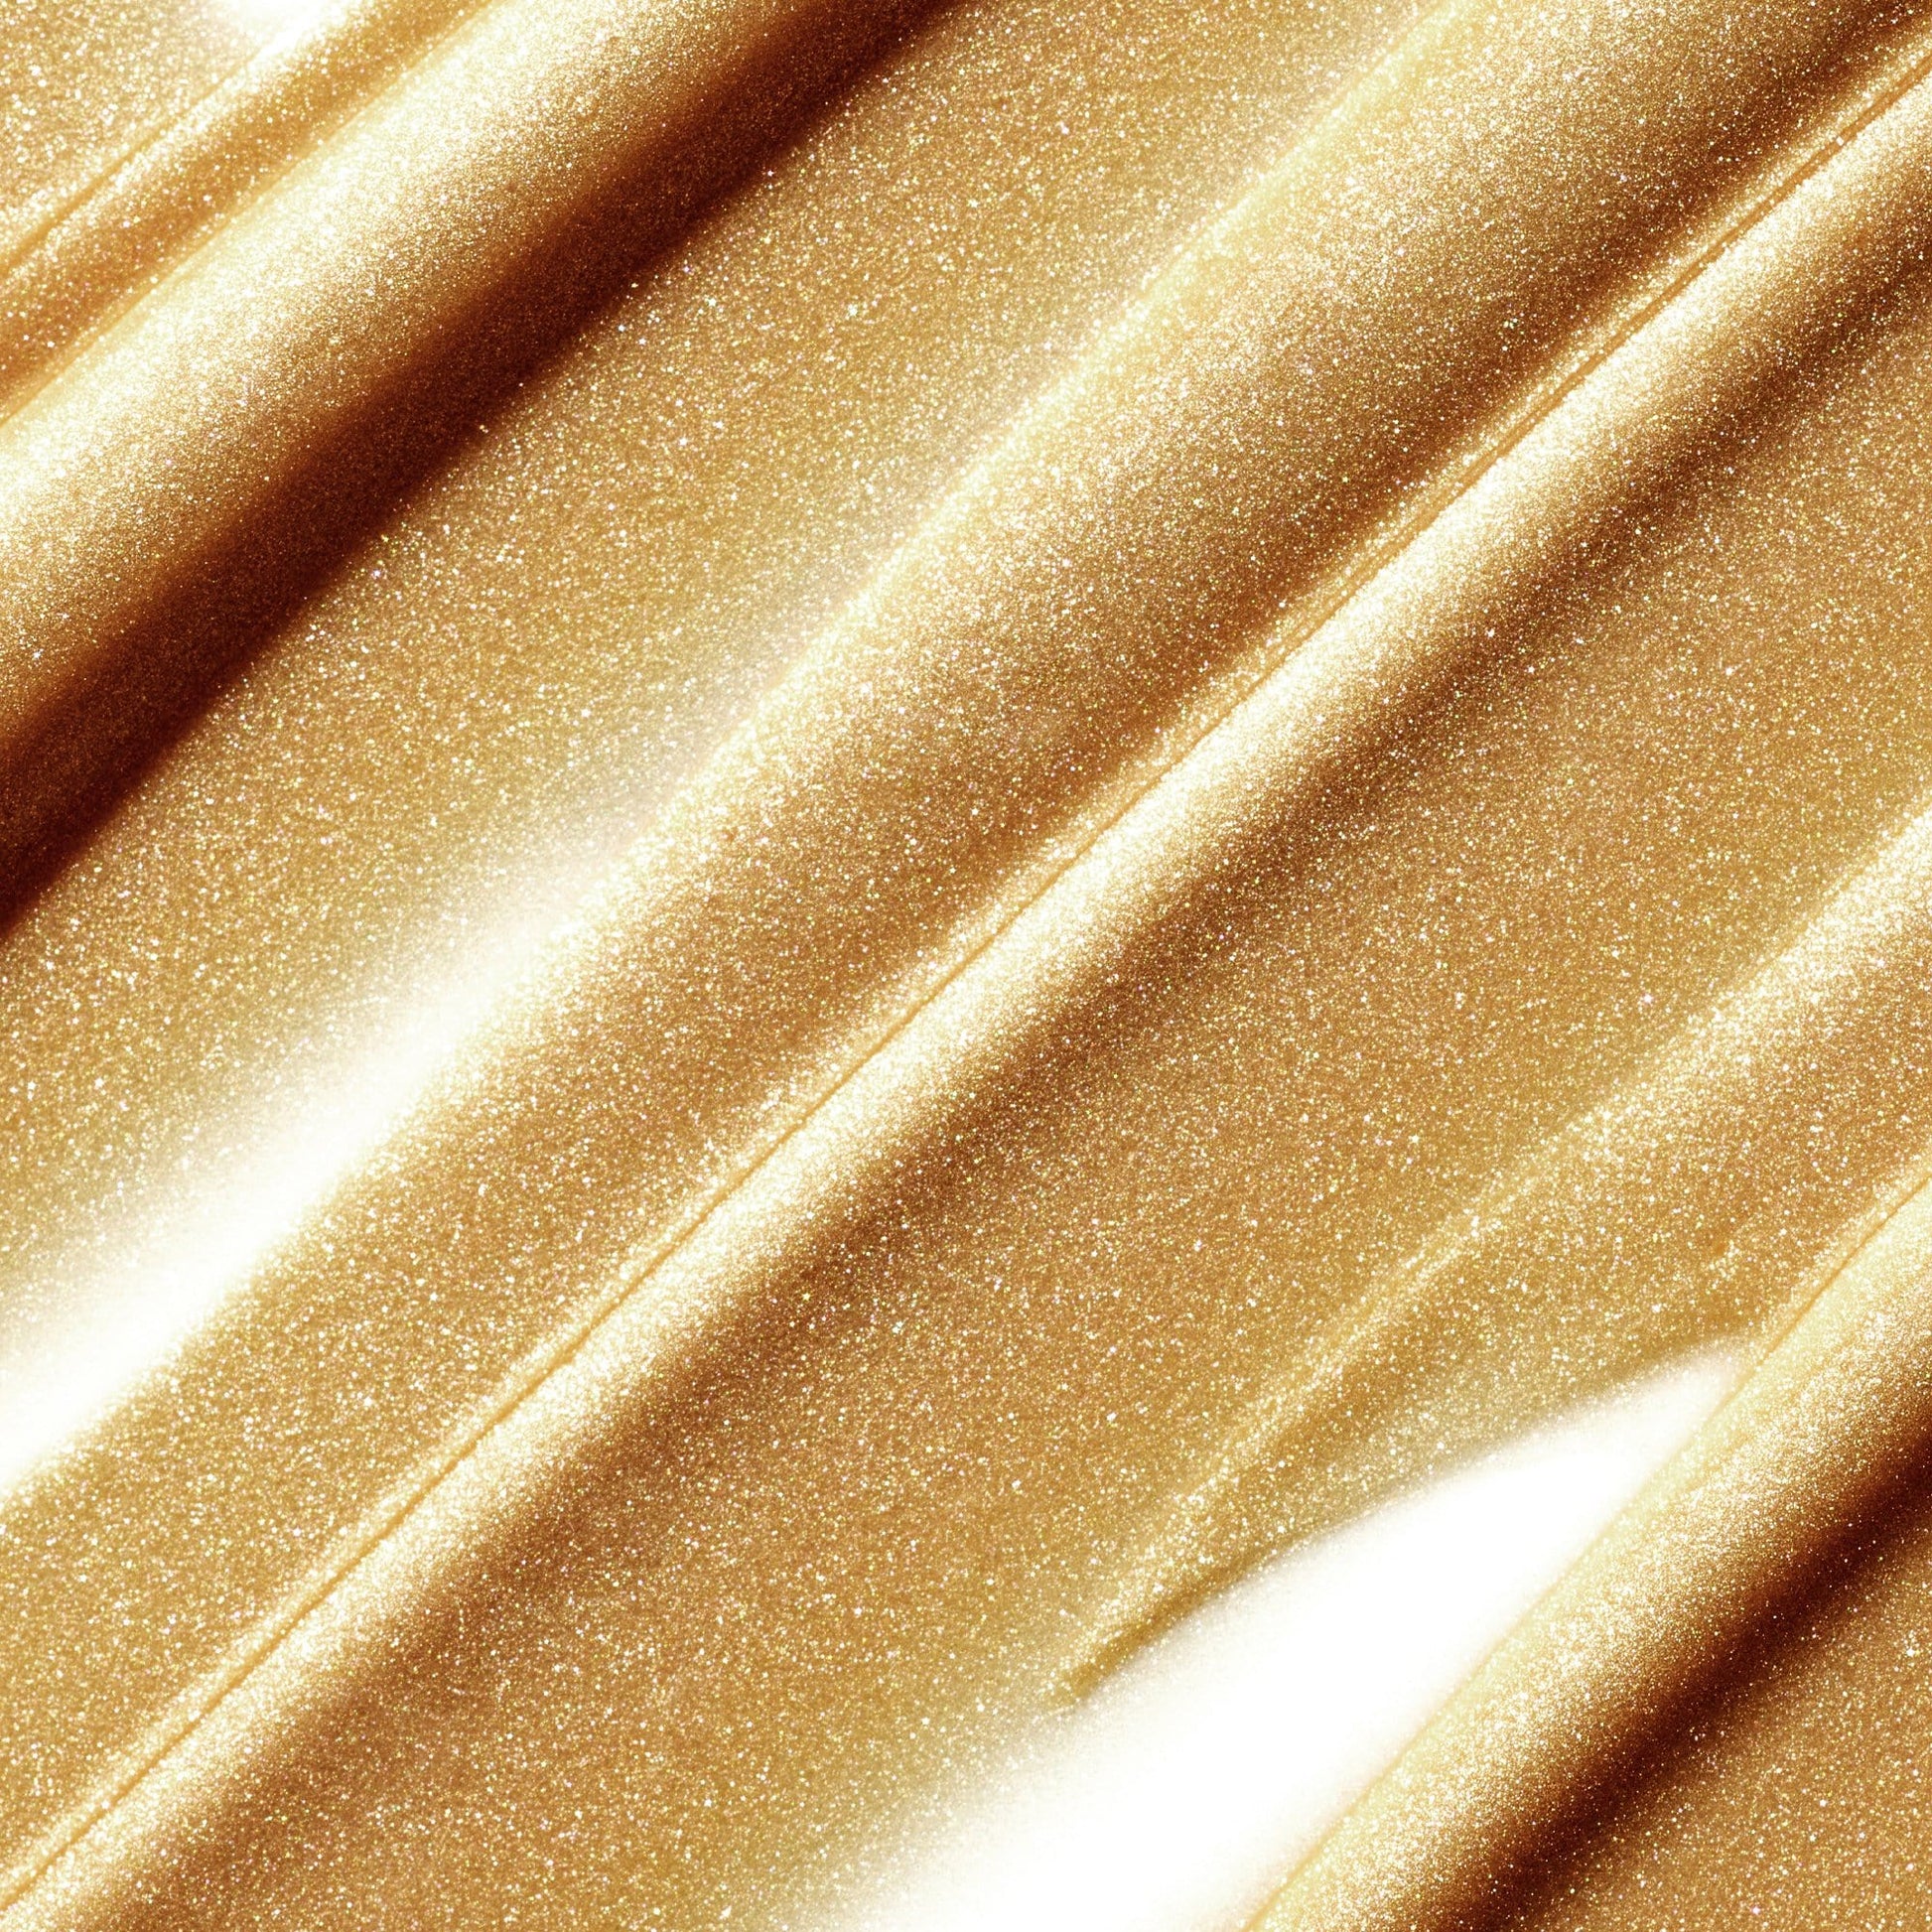 Fairy Godmother glittery gold goop texture 